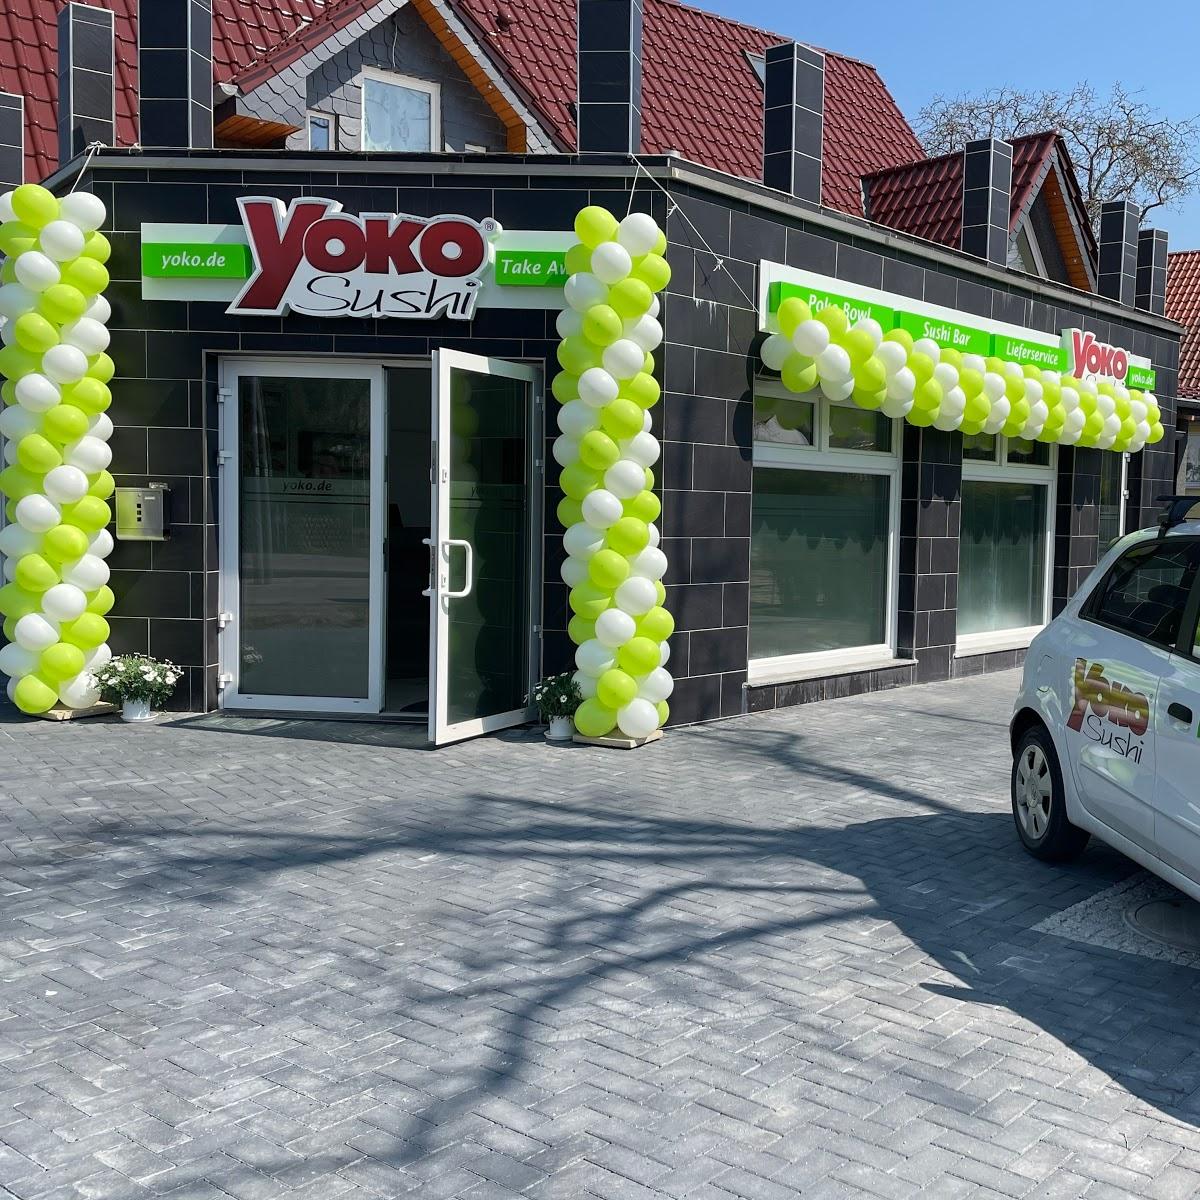 Restaurant "Yoko Sushi Lieferservice" in Falkensee